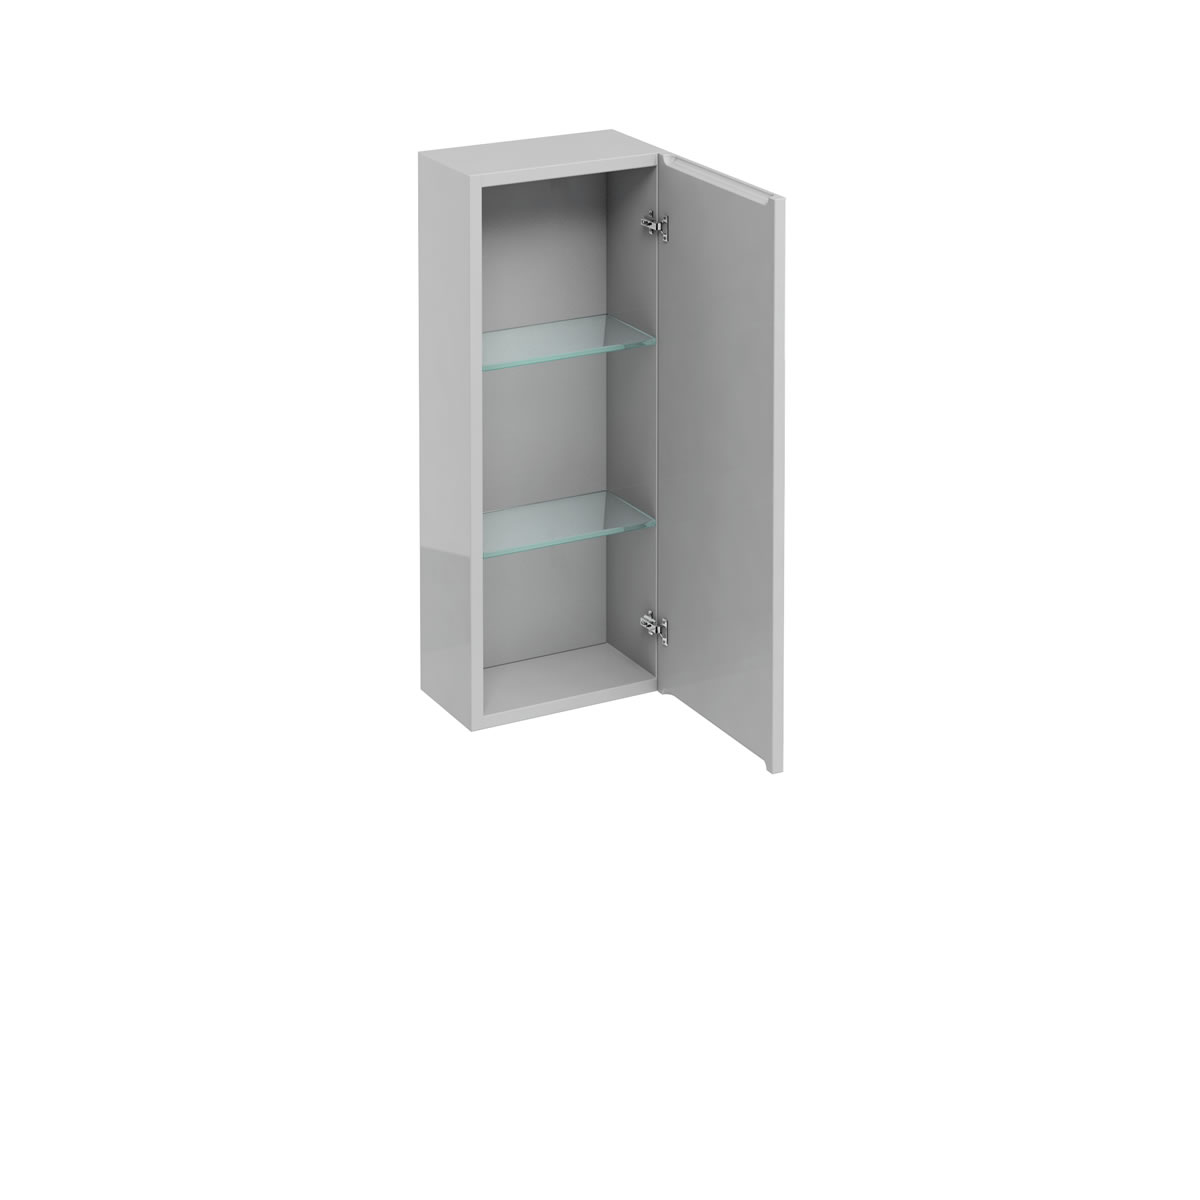 300 single door wall cabinet - Light grey